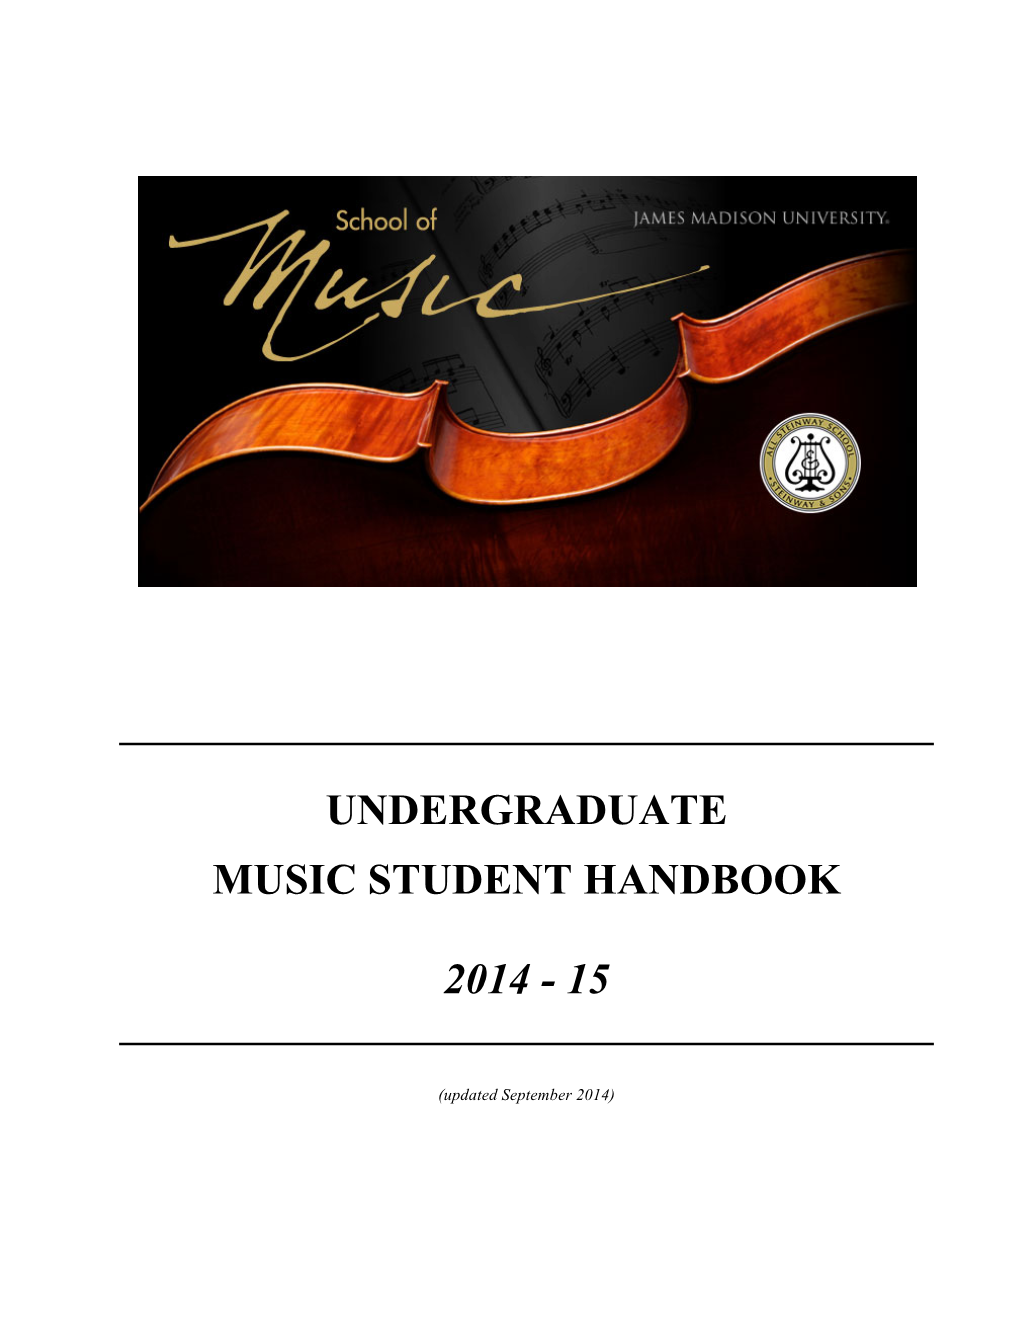 Undergraduate Music Student Handbook 2014